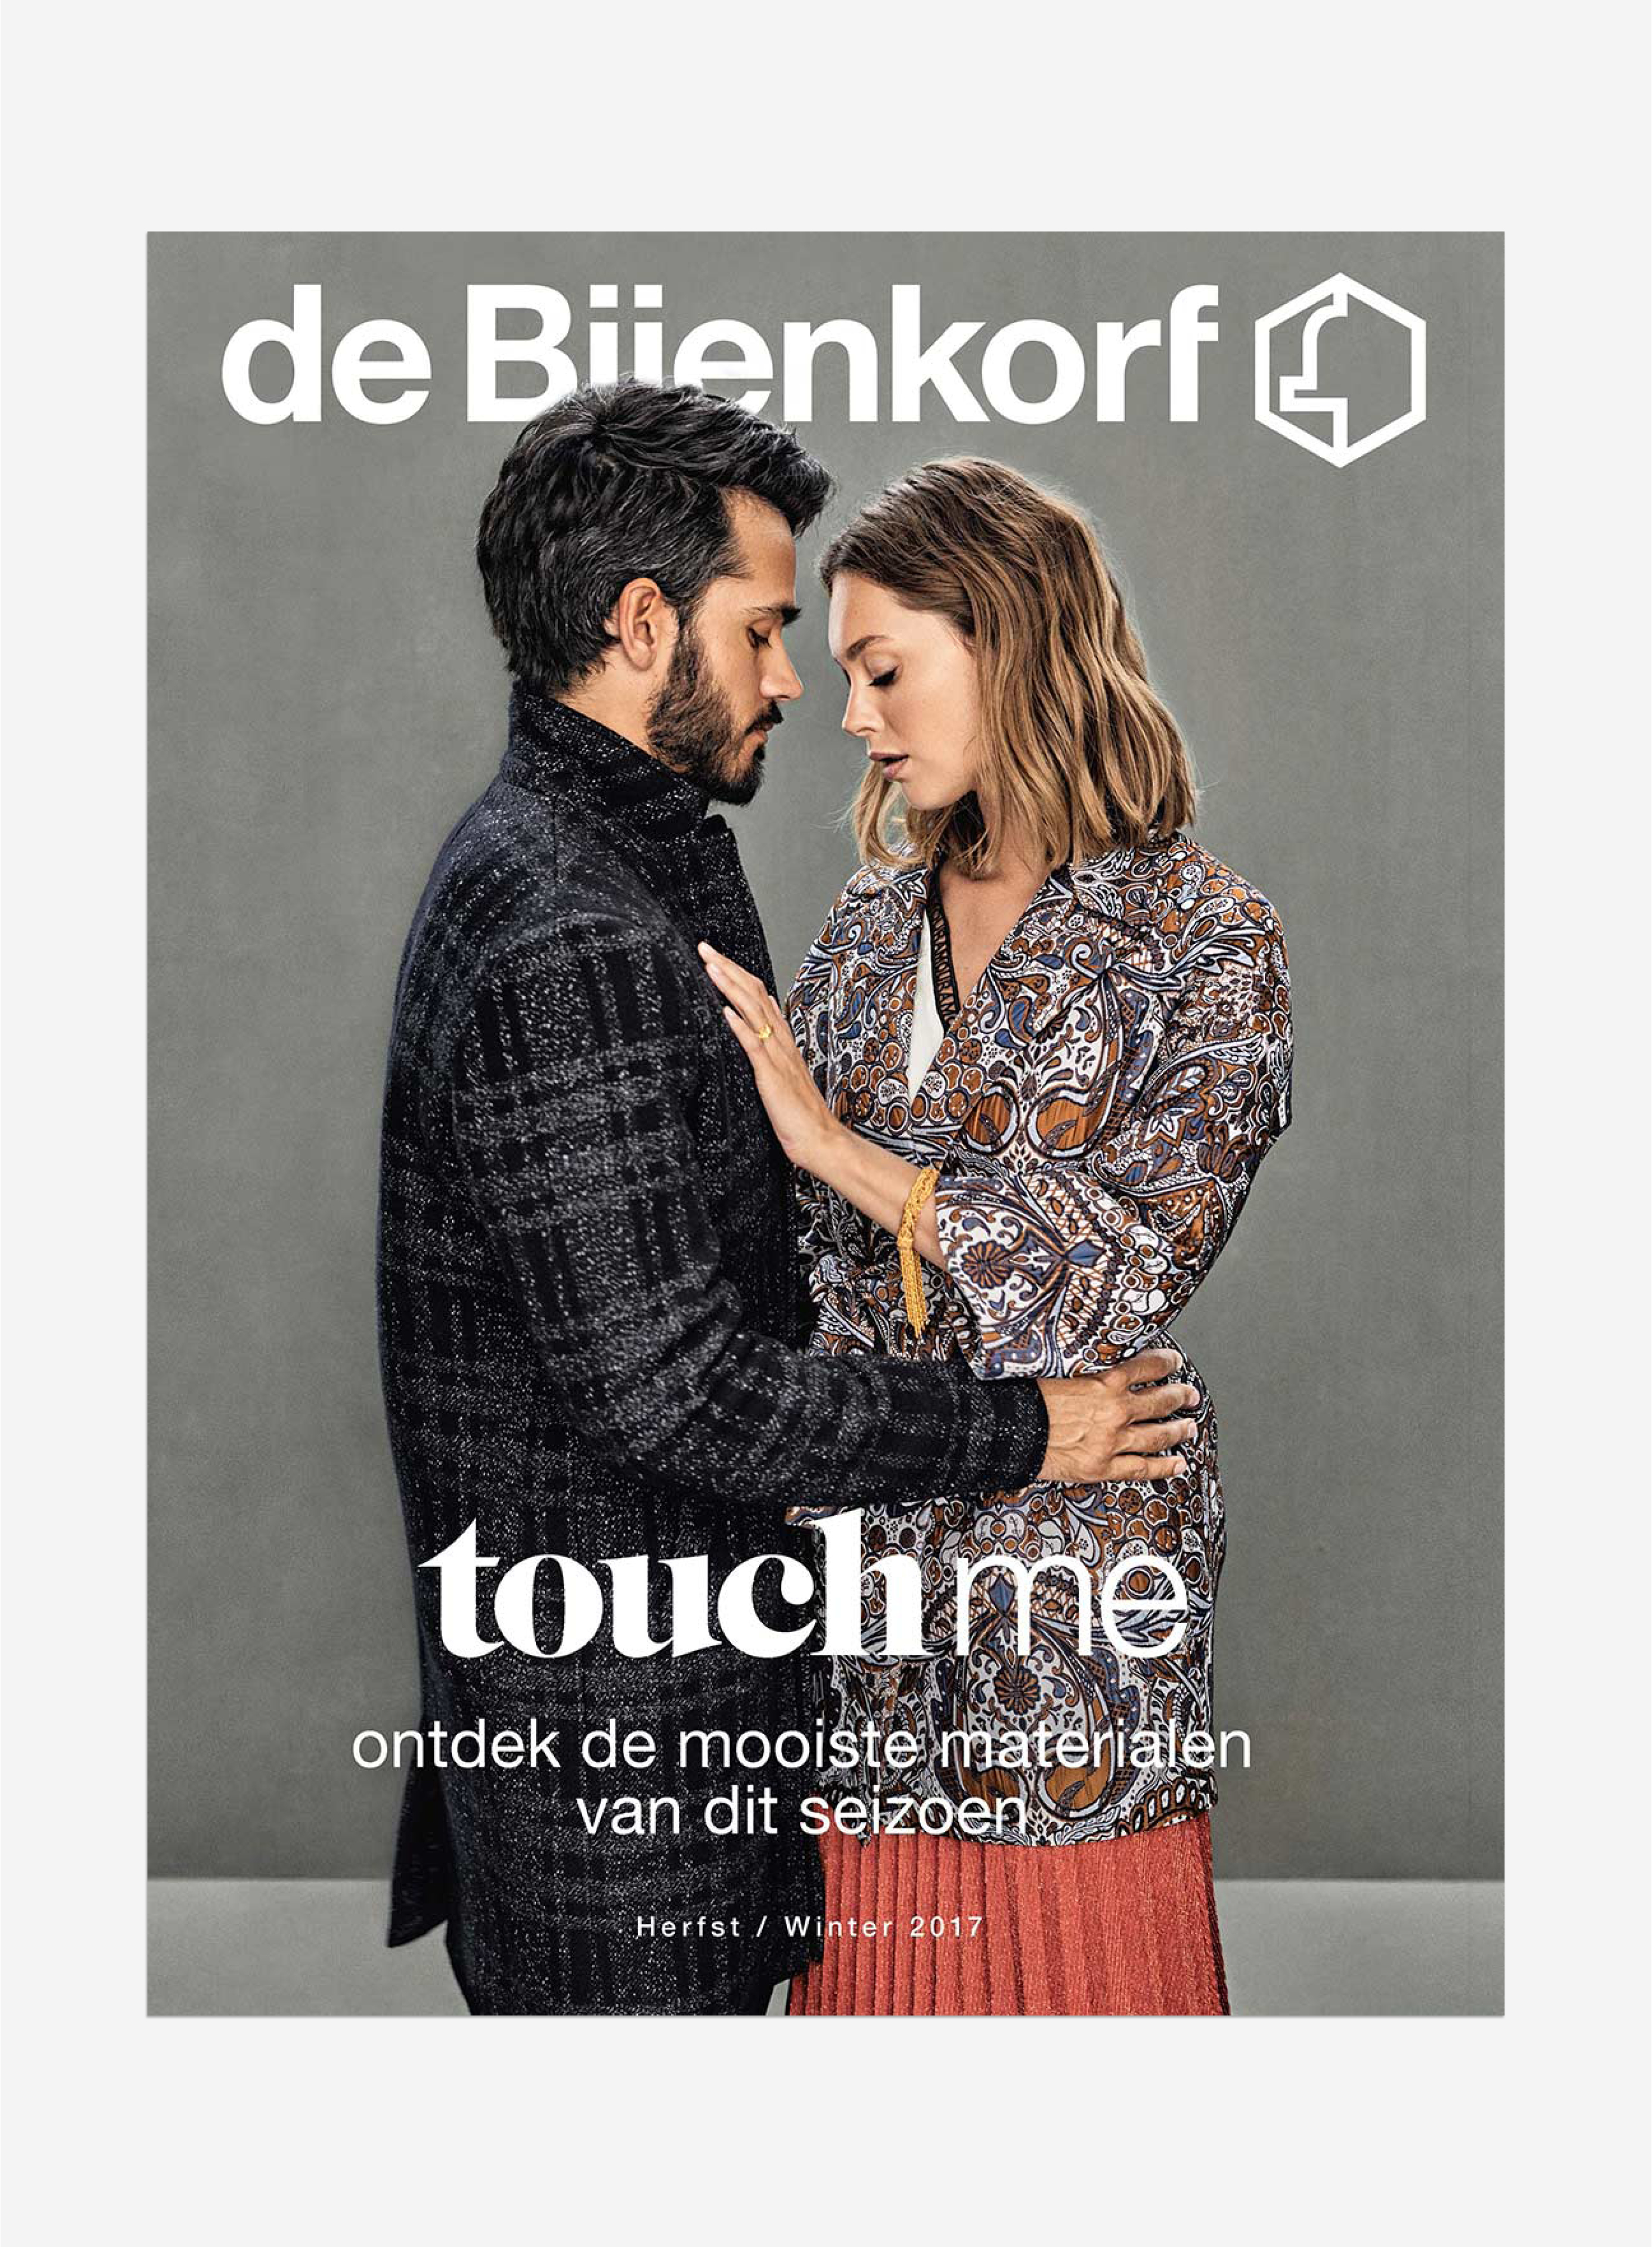 de Bijenkorf editorial magazine layout fashion cover